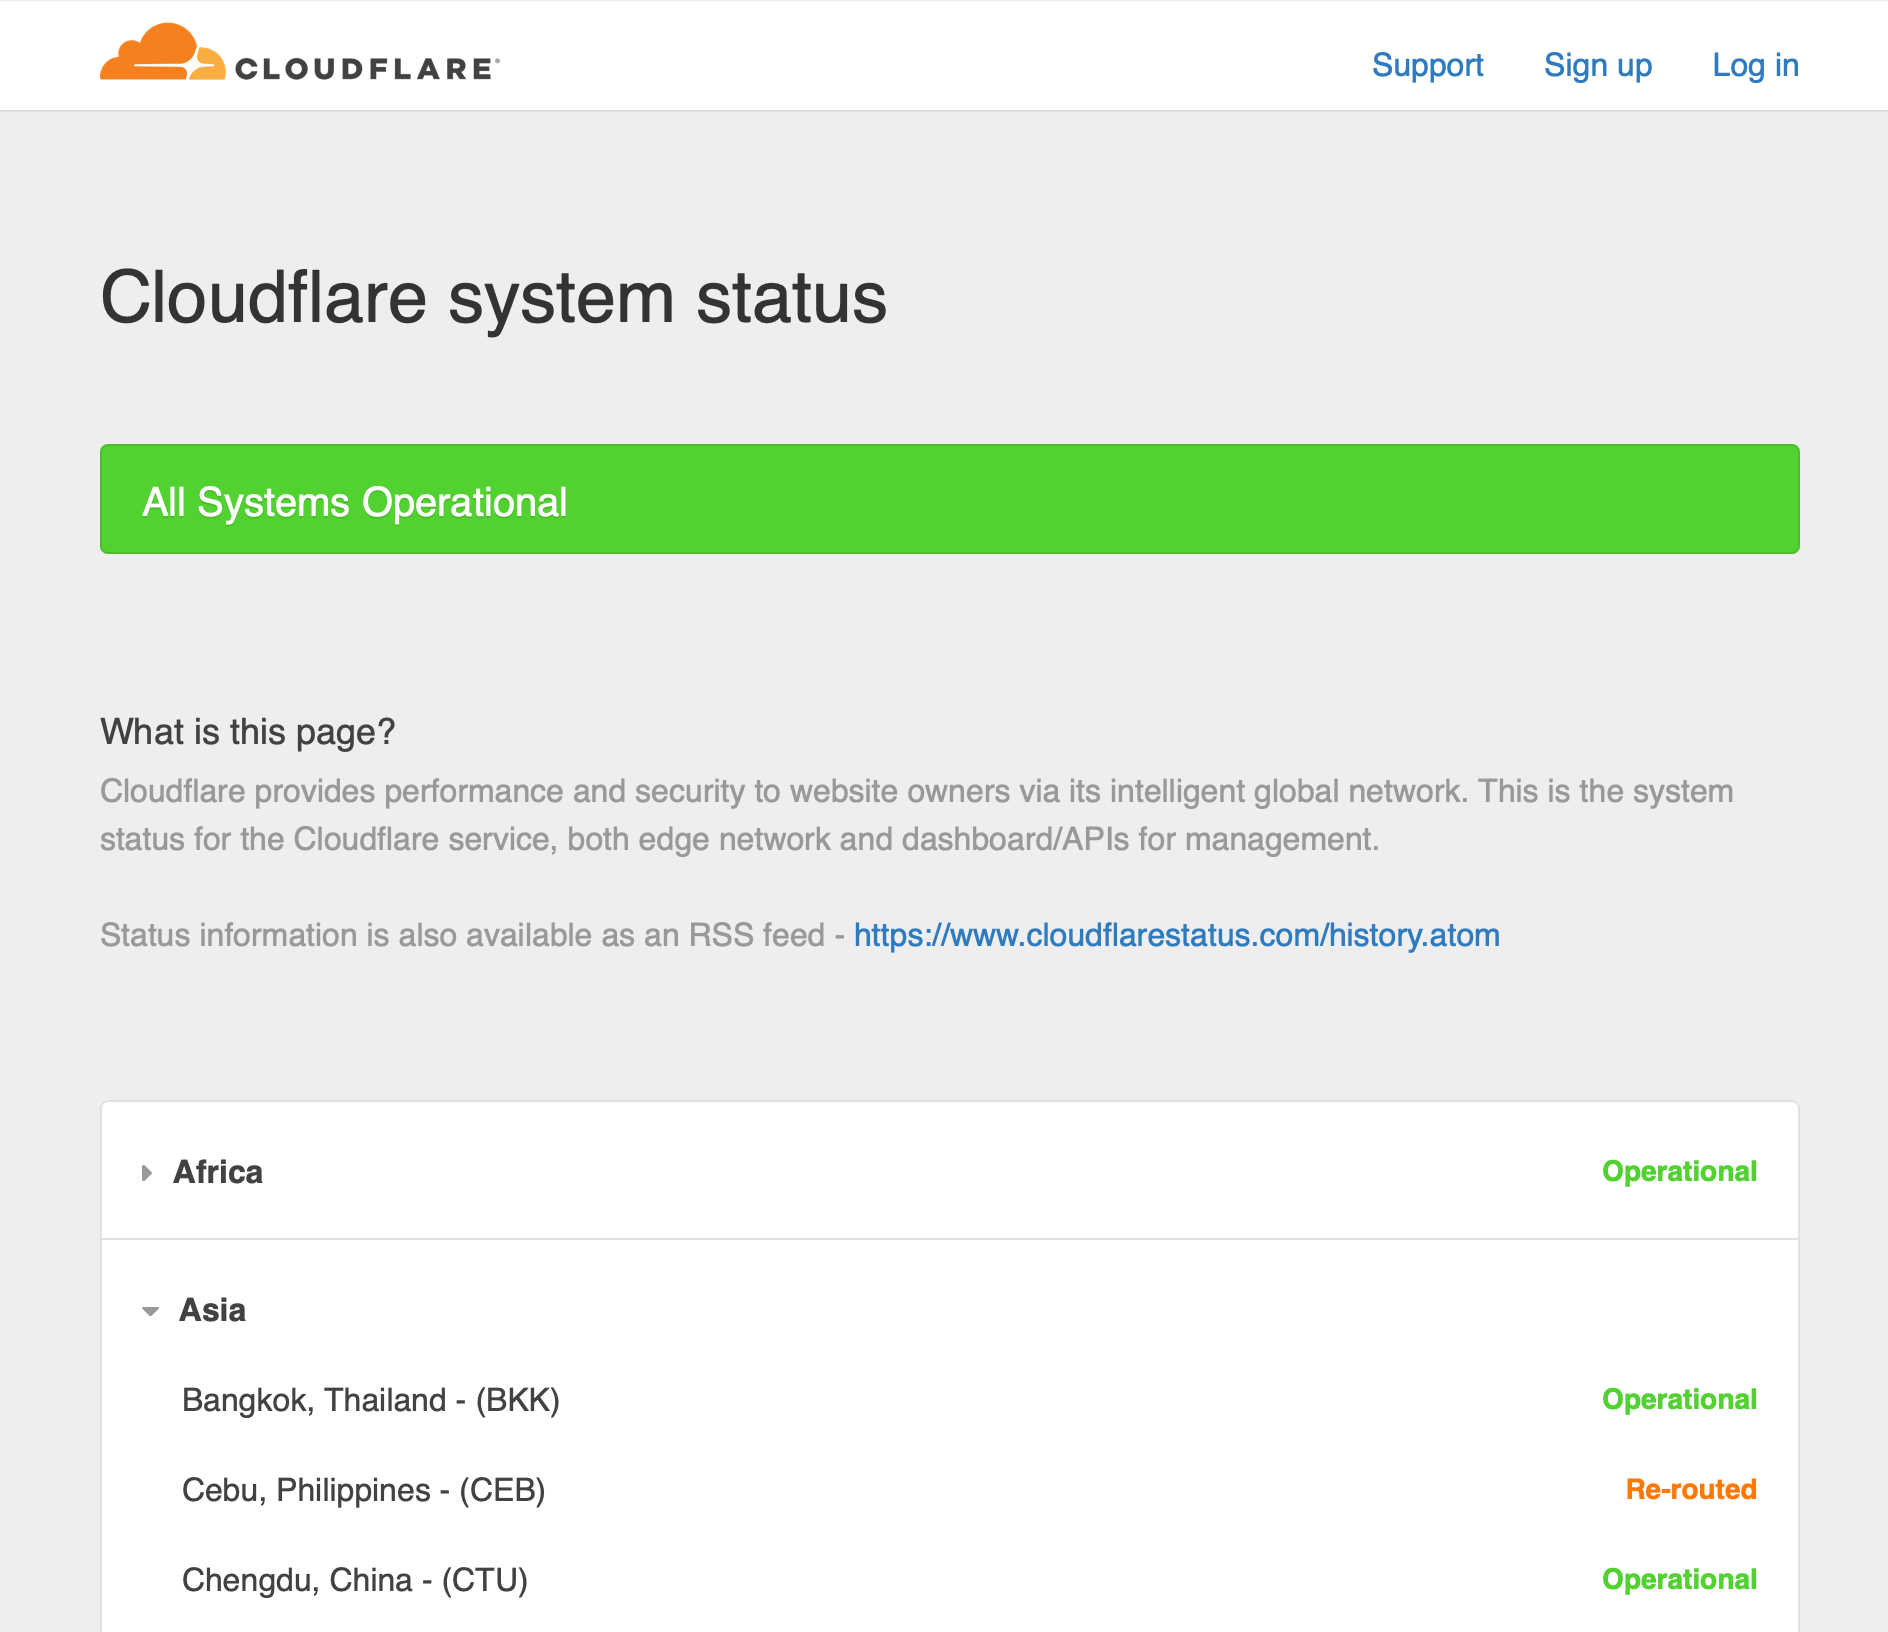 cloudflare-status-2017.png